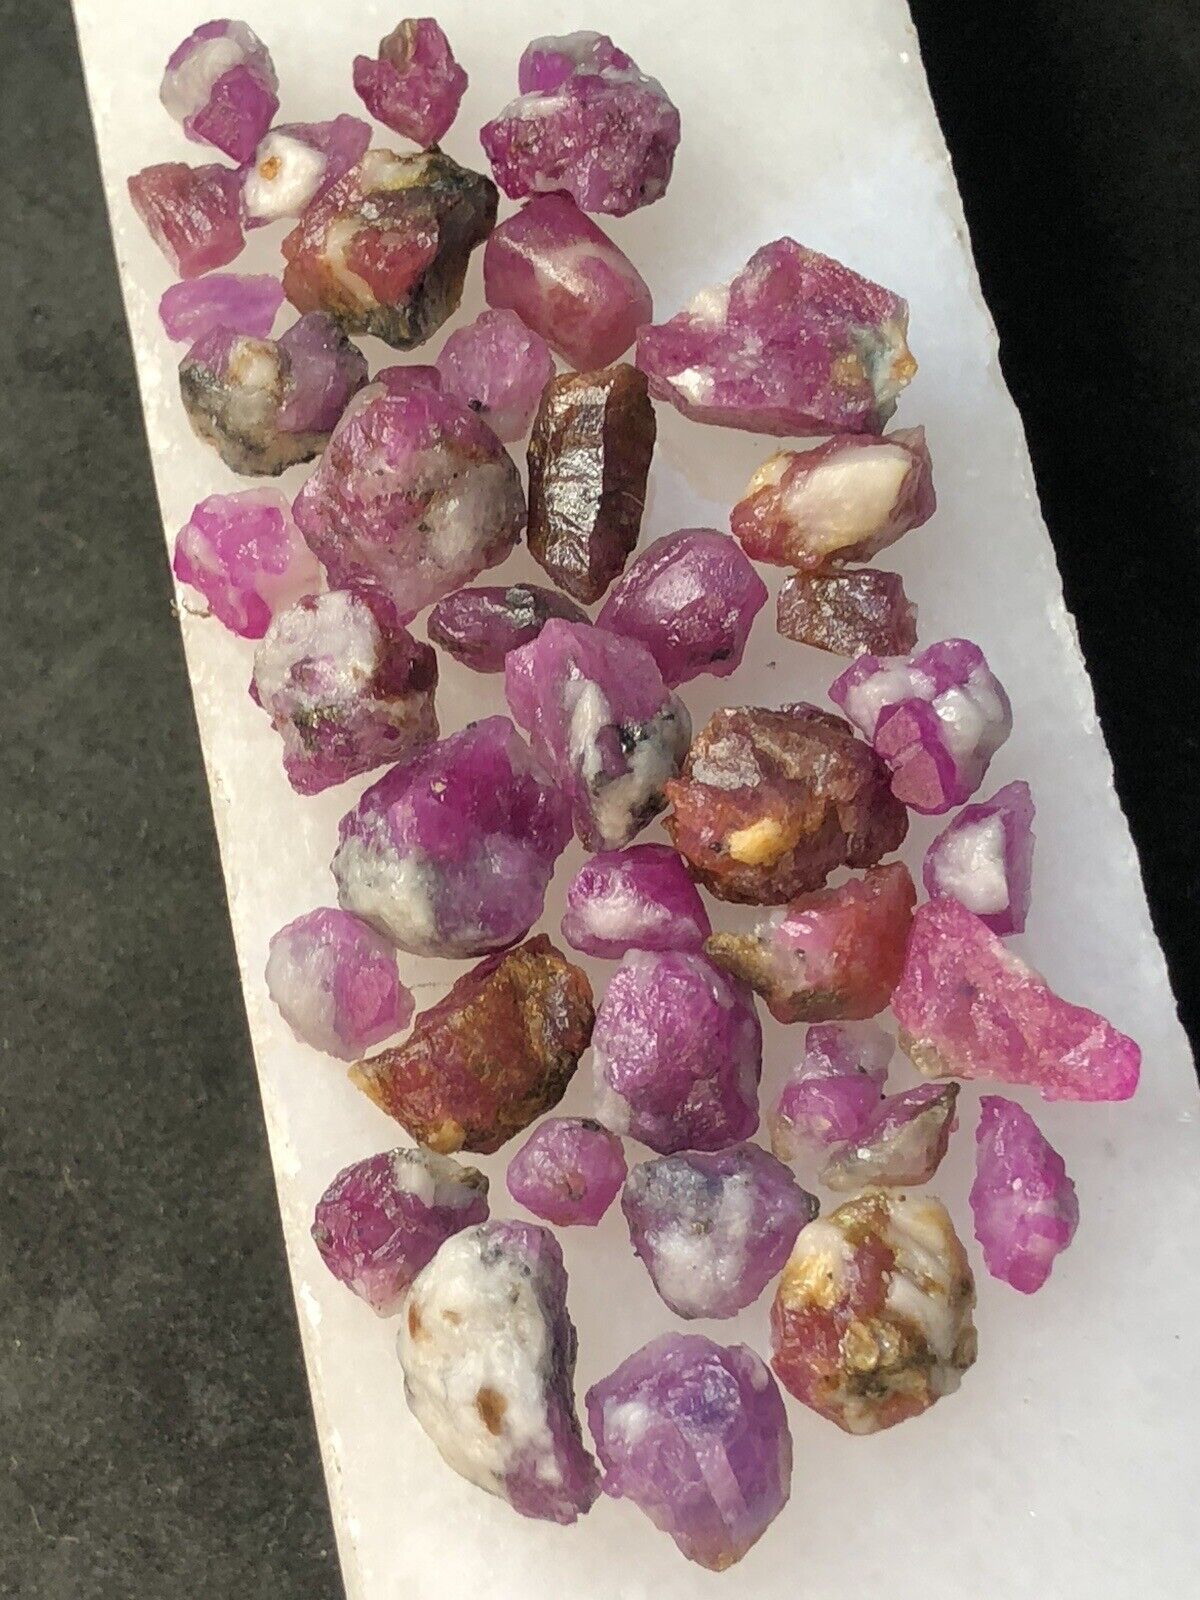 85 Carat Natural Ruby Rough Crystals Lot From Jegdalek, Afghanistan